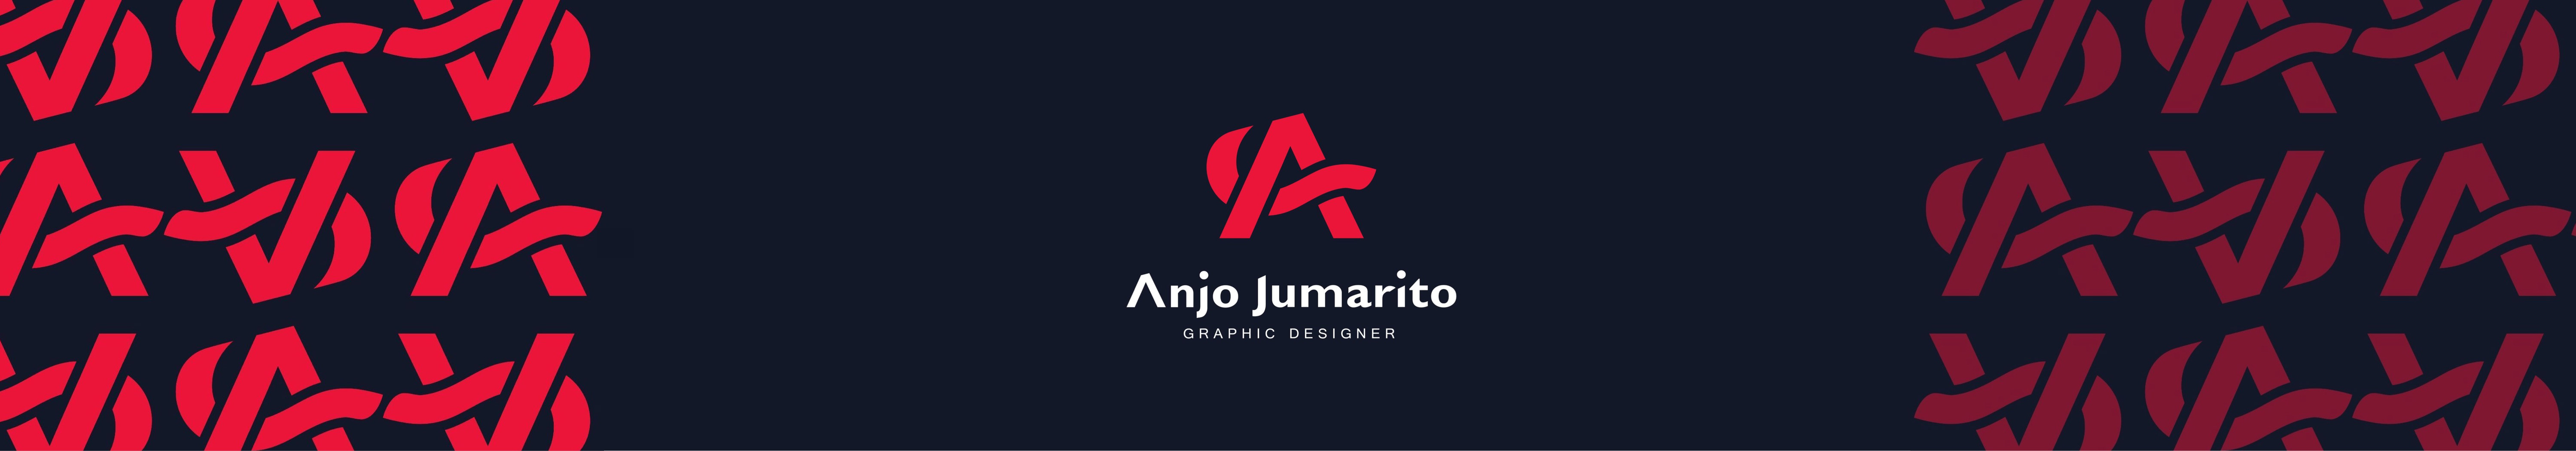 Anjo Jumarito のプロファイルバナー